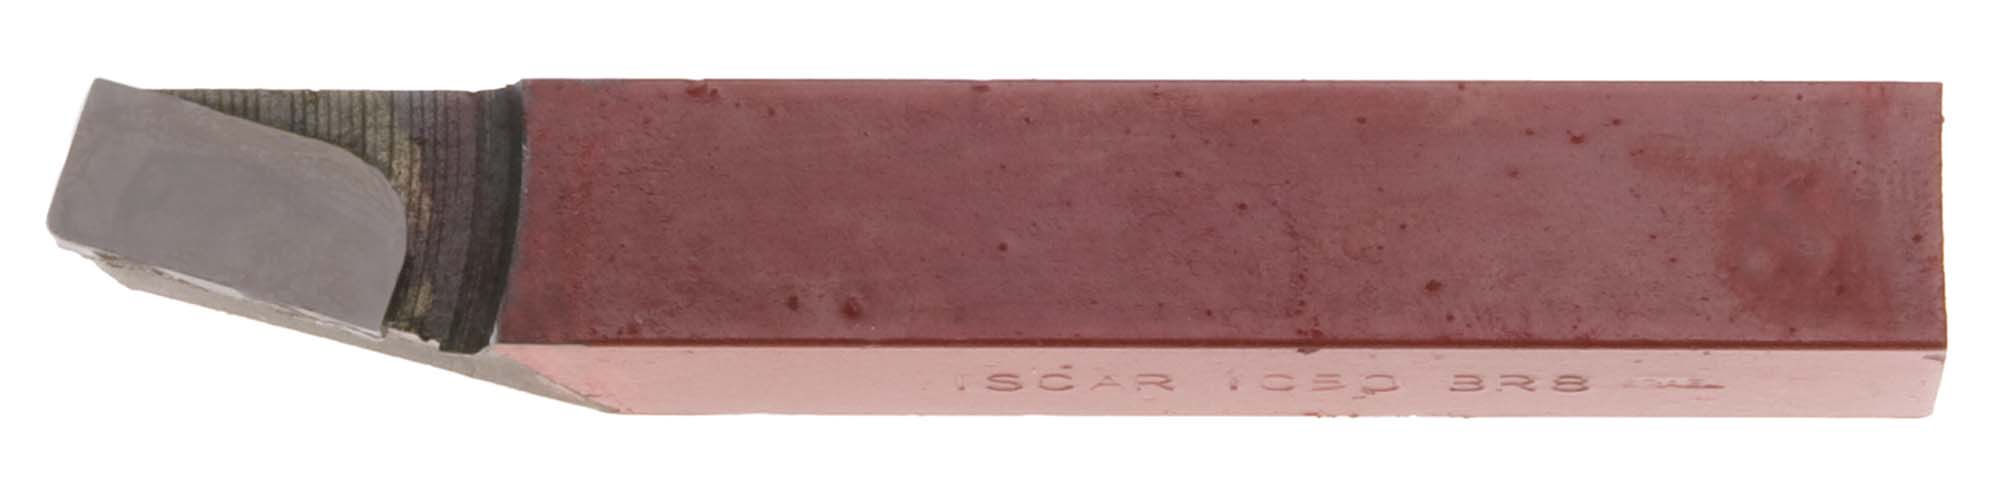 5/16" Square BR Iscar Carbide Toolbit Grade IC50/C5